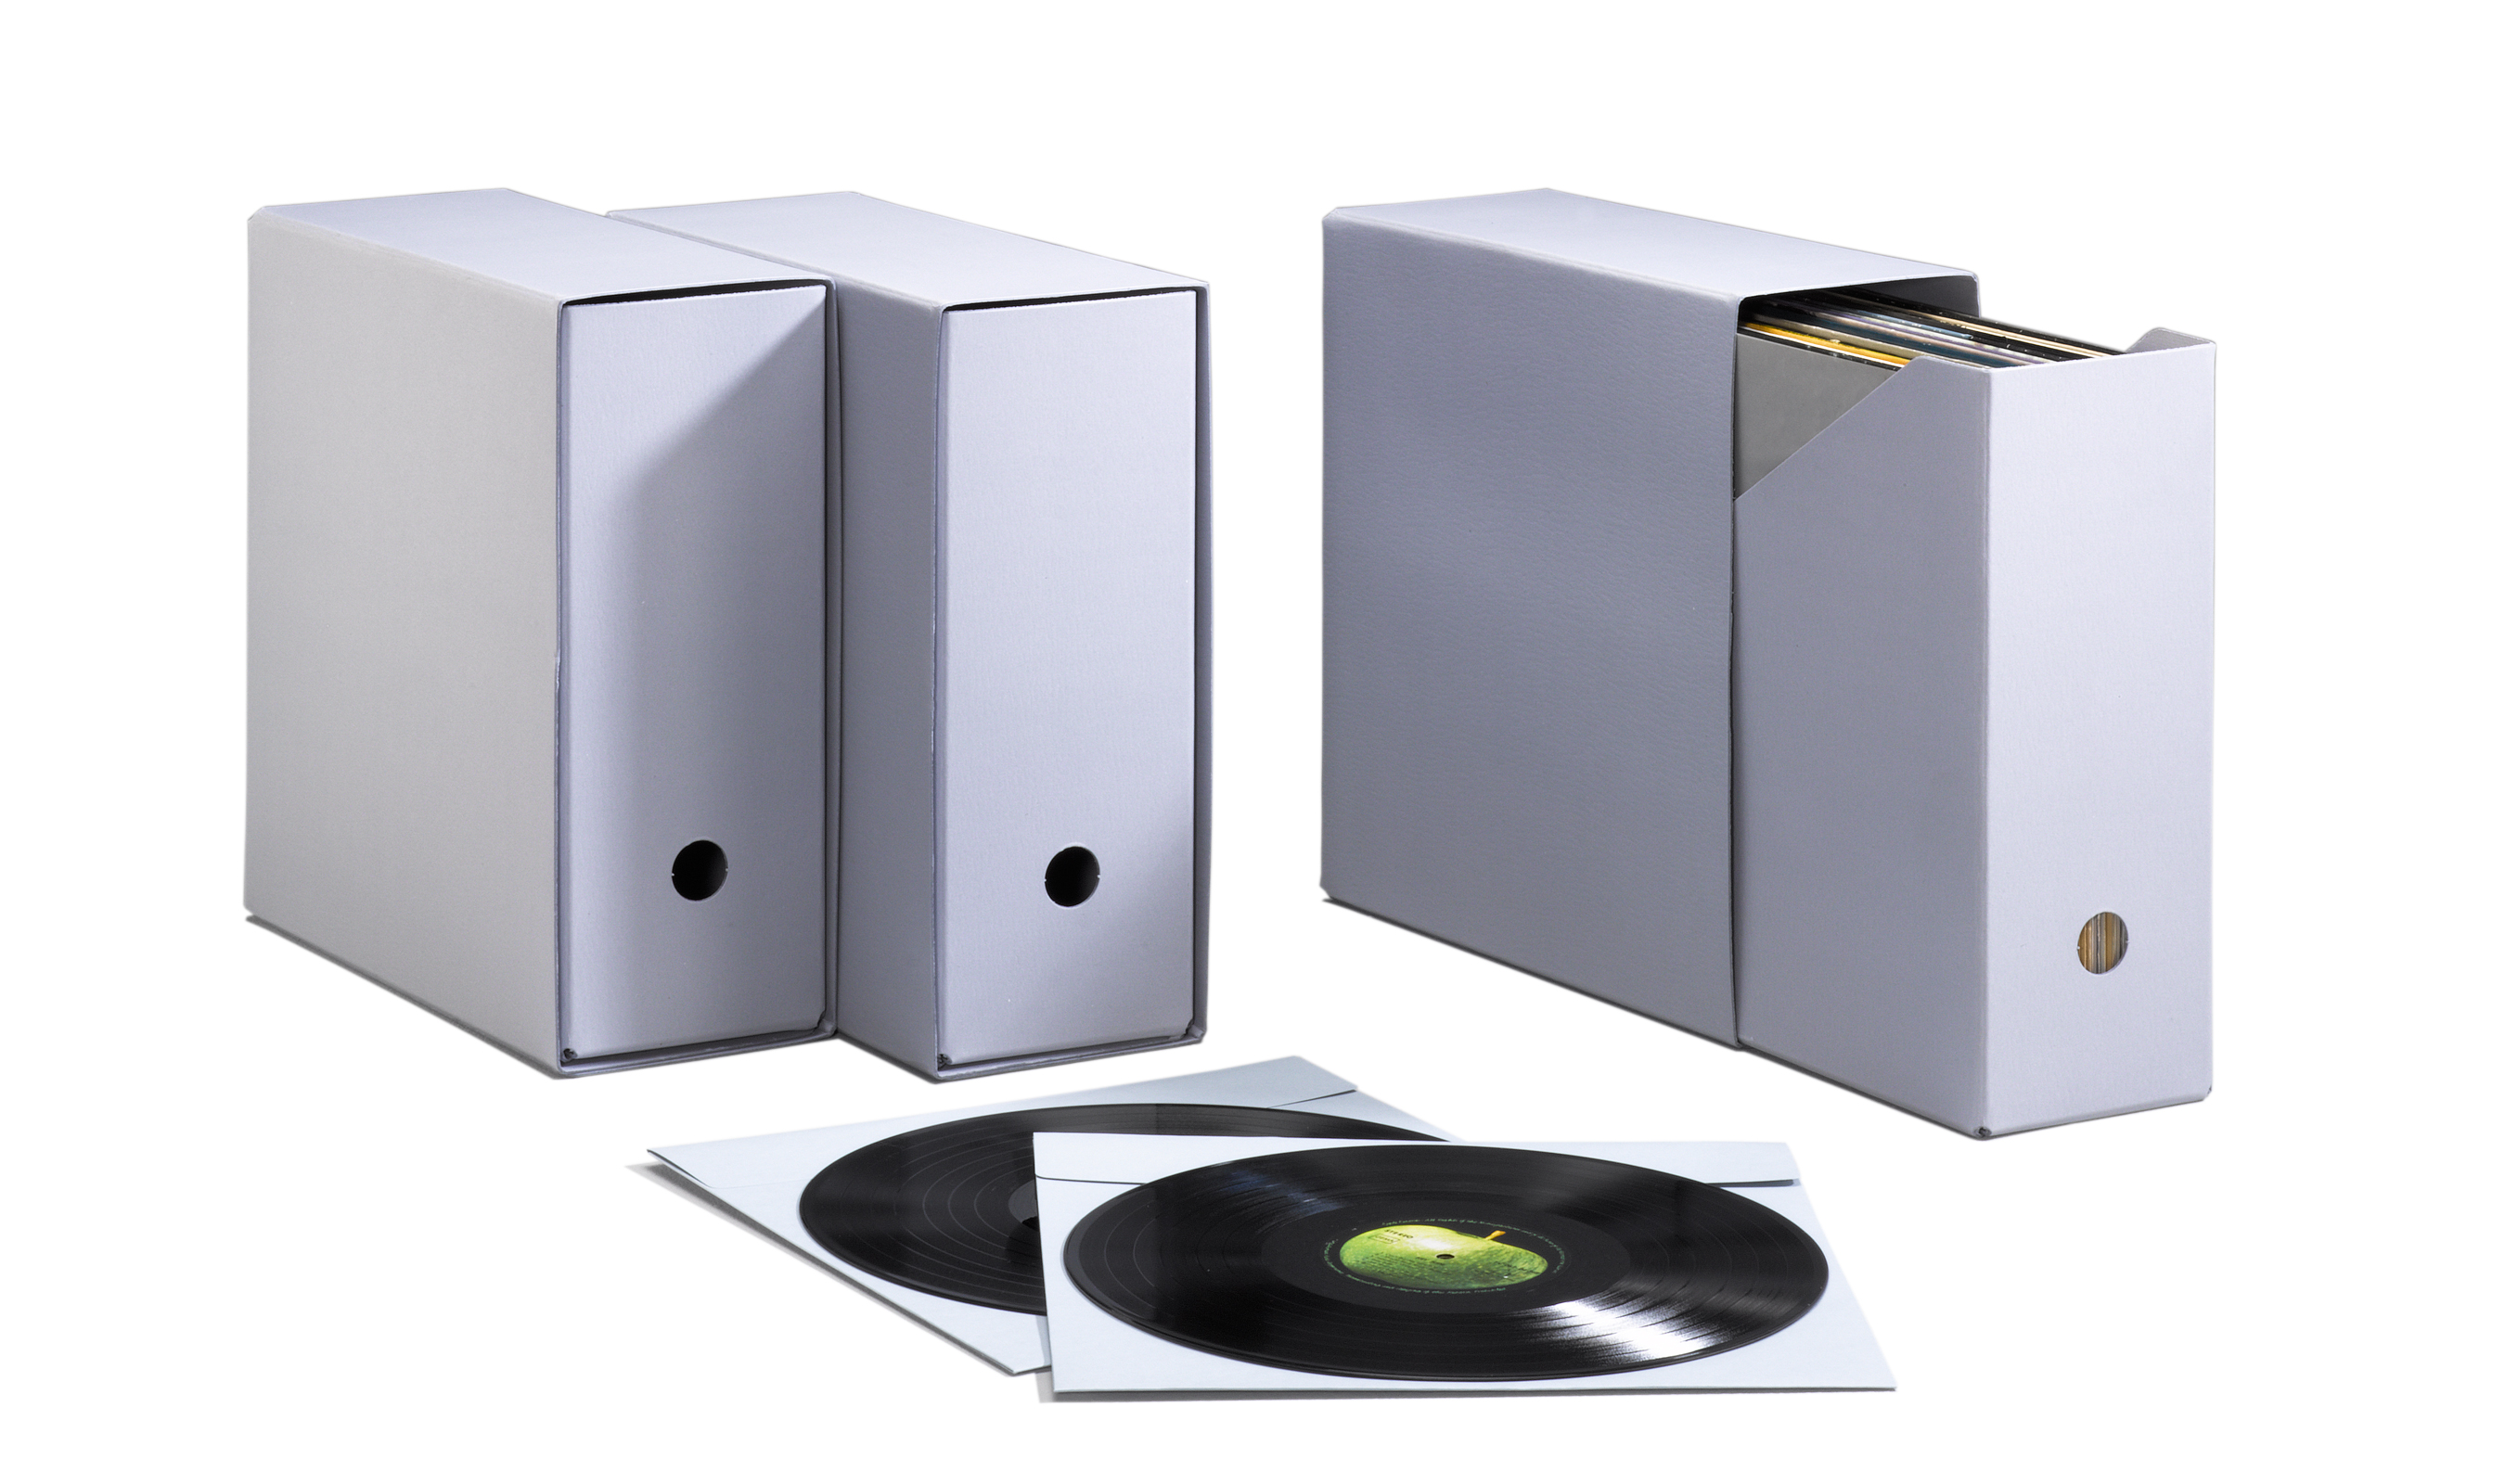 Record box "Odeon" - 7" Single Format with slipcase Premium - Discontinued model